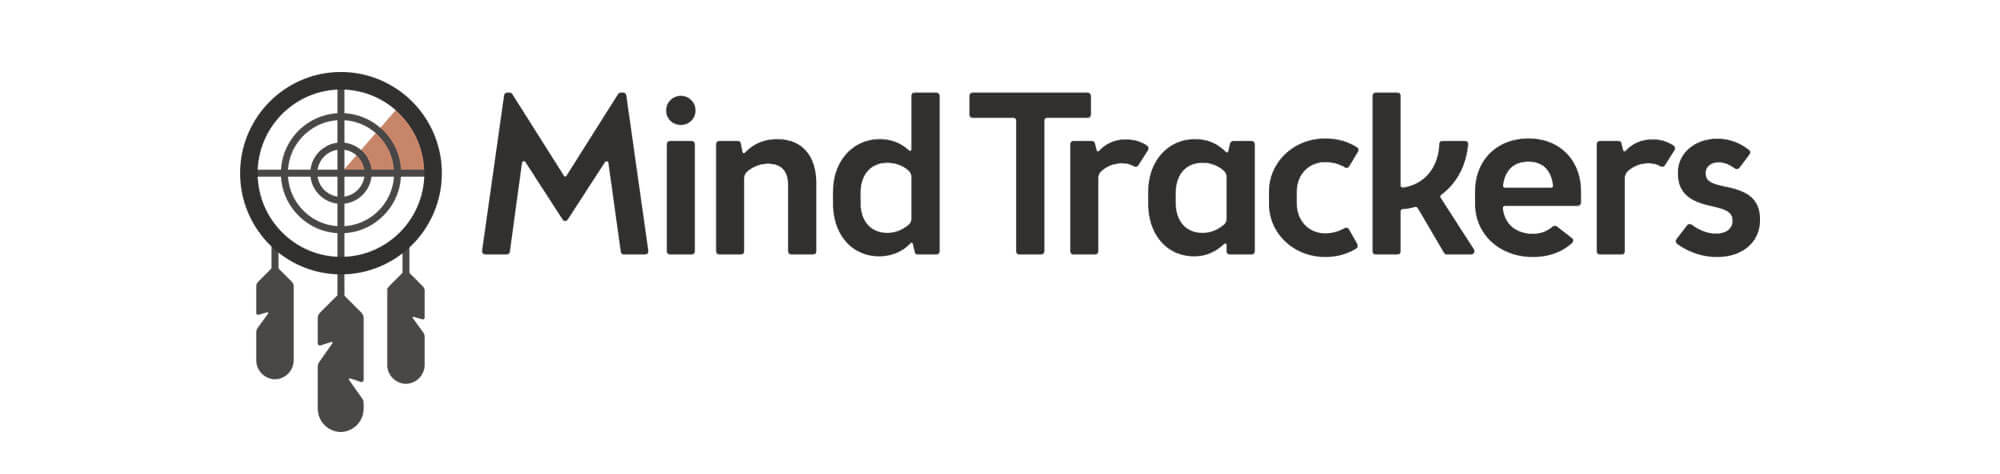 mind-trackers-final-logo